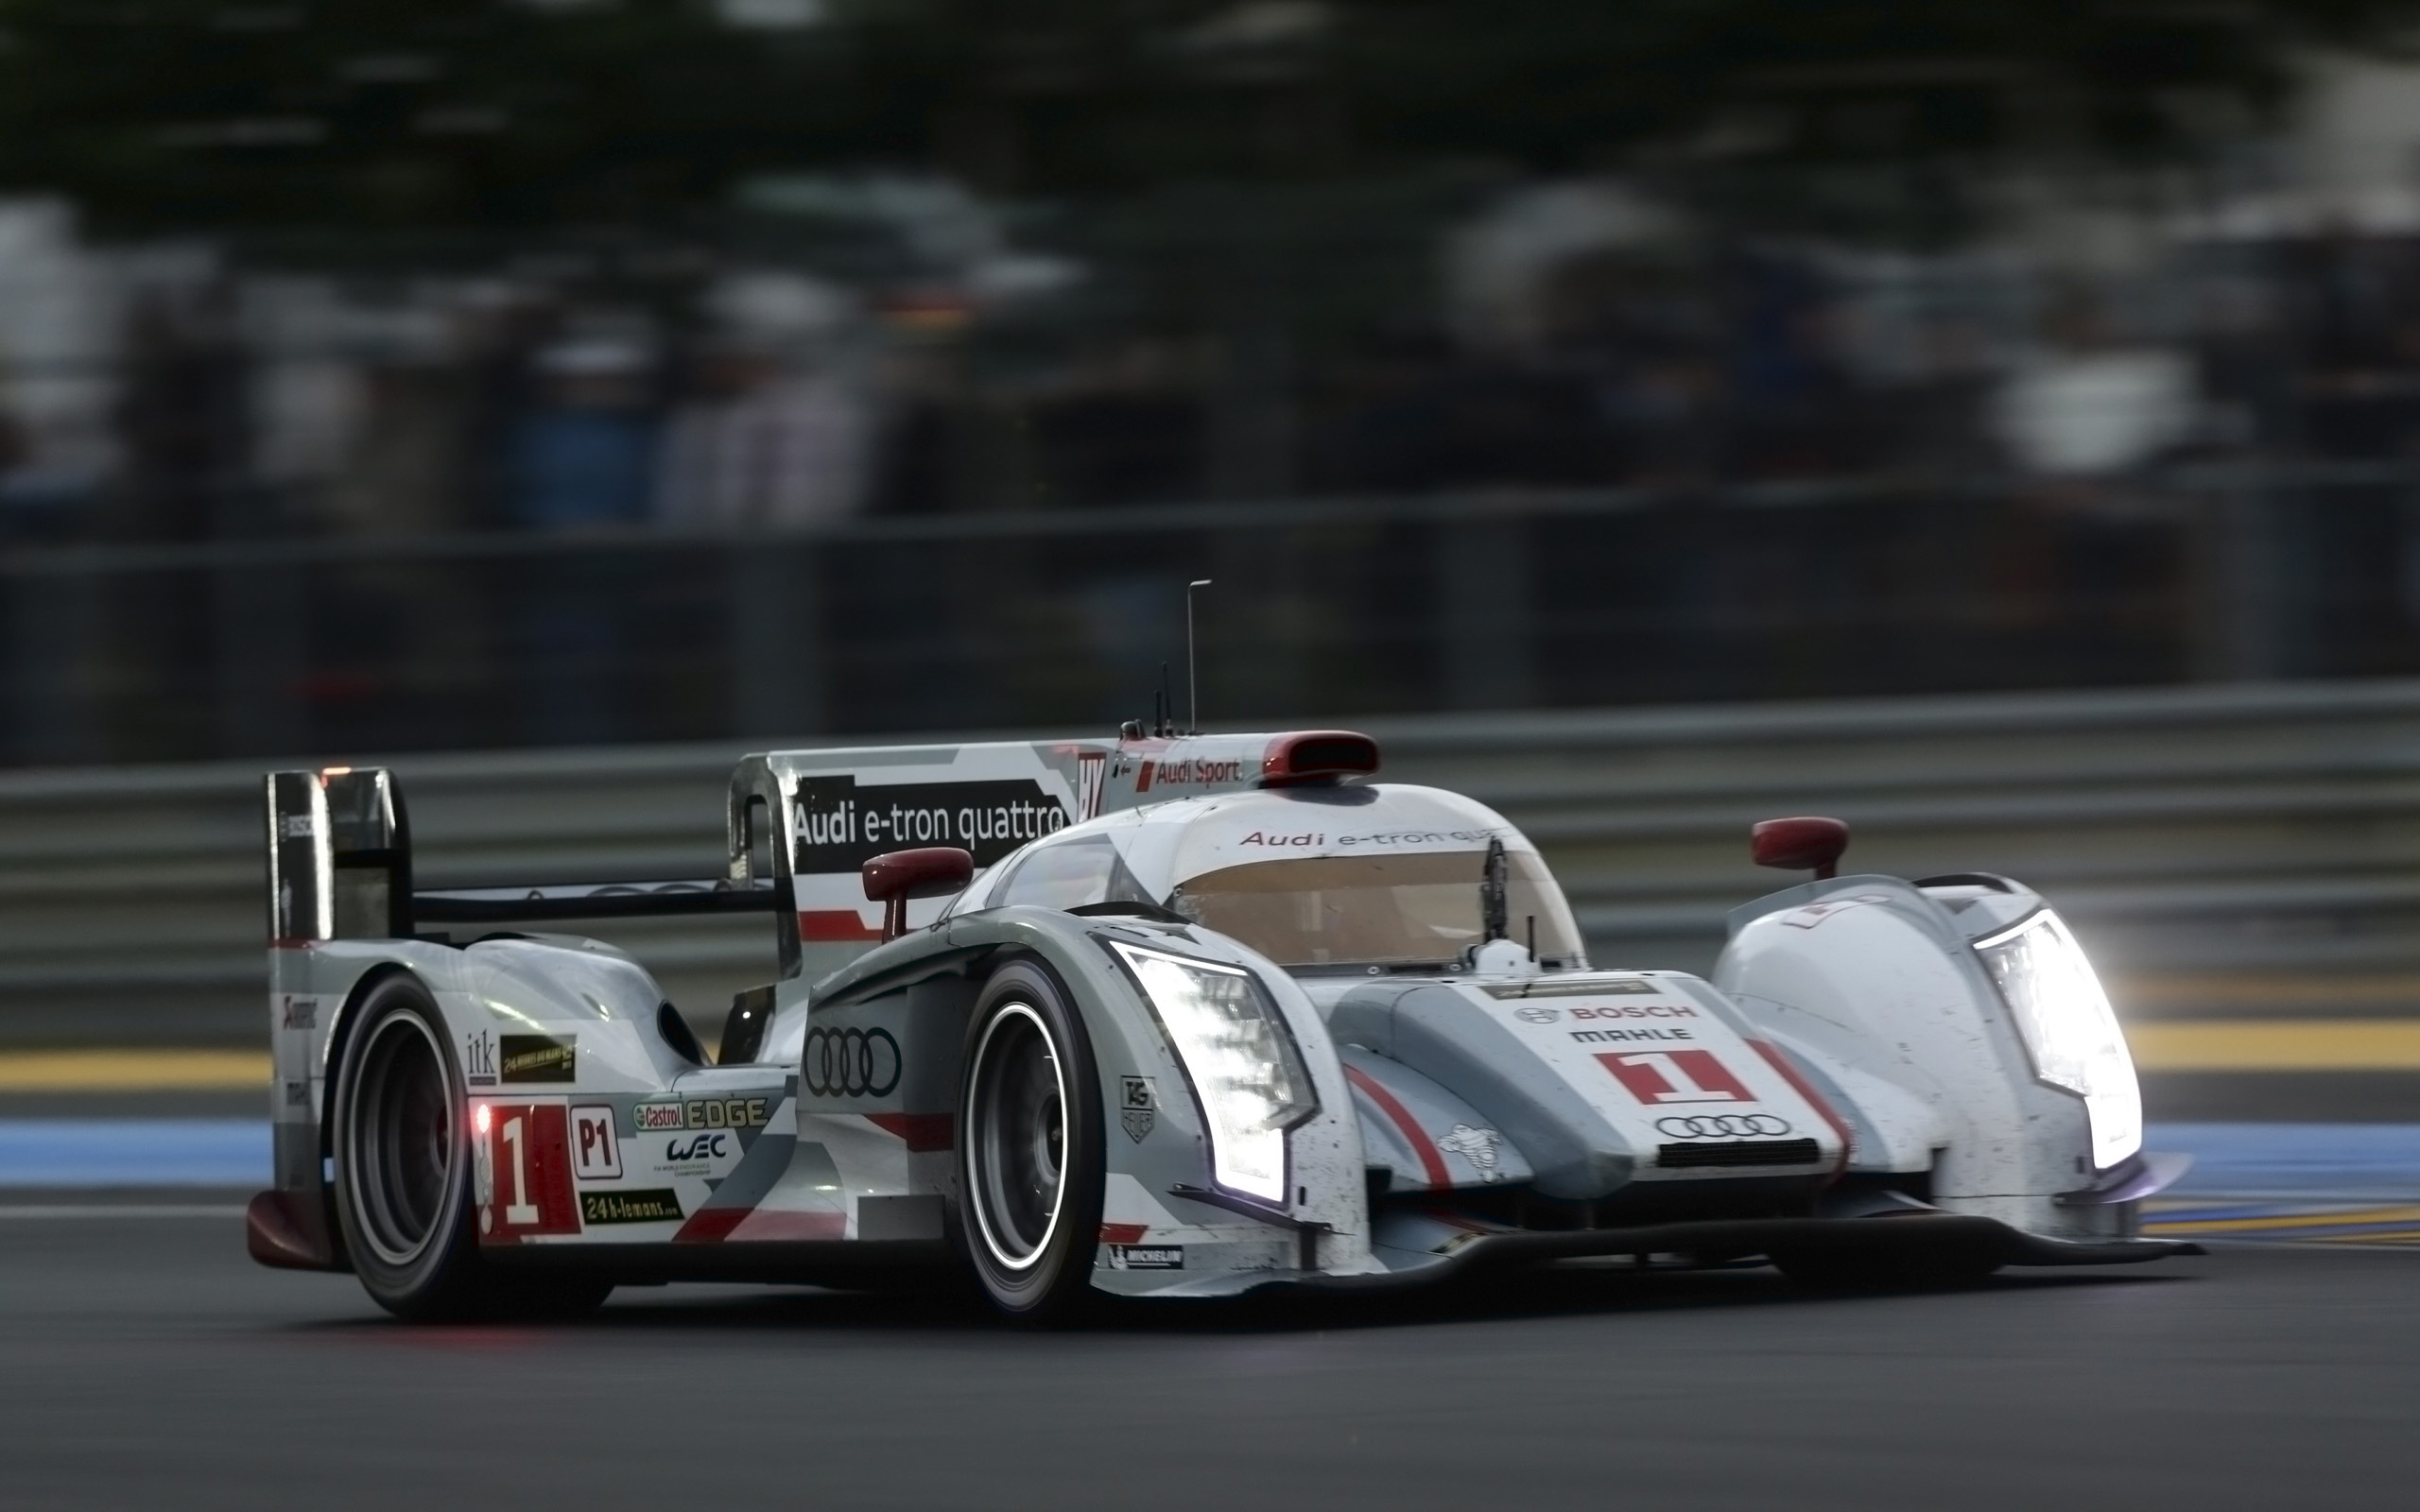 Le Mans race, Audi R18, High-quality wallpapers, Speedy cars, 2560x1600 HD Desktop